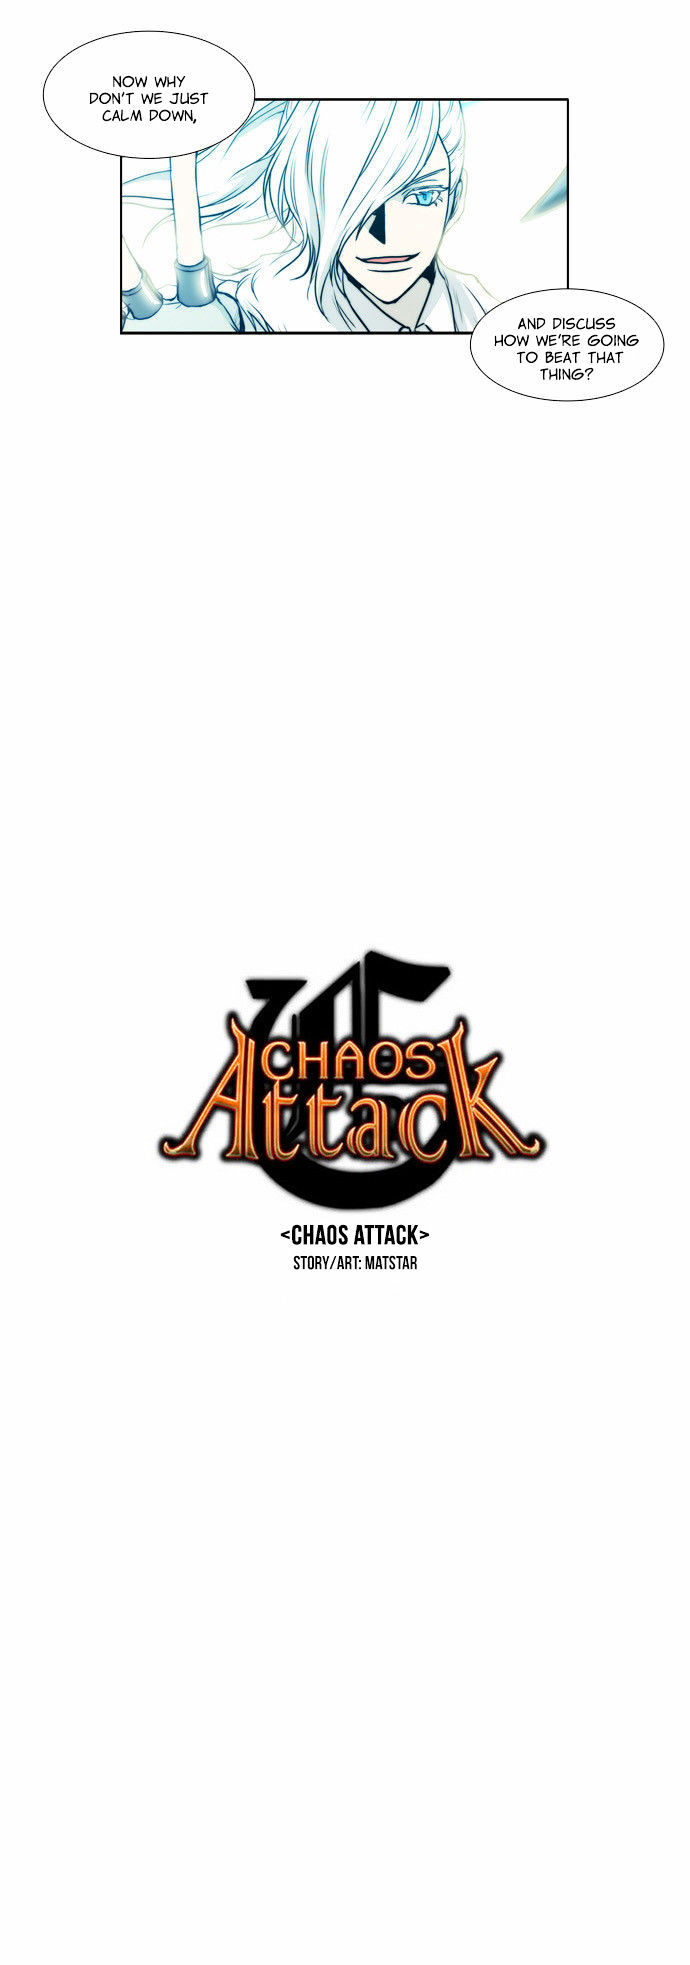 Chaos Attack 74 3